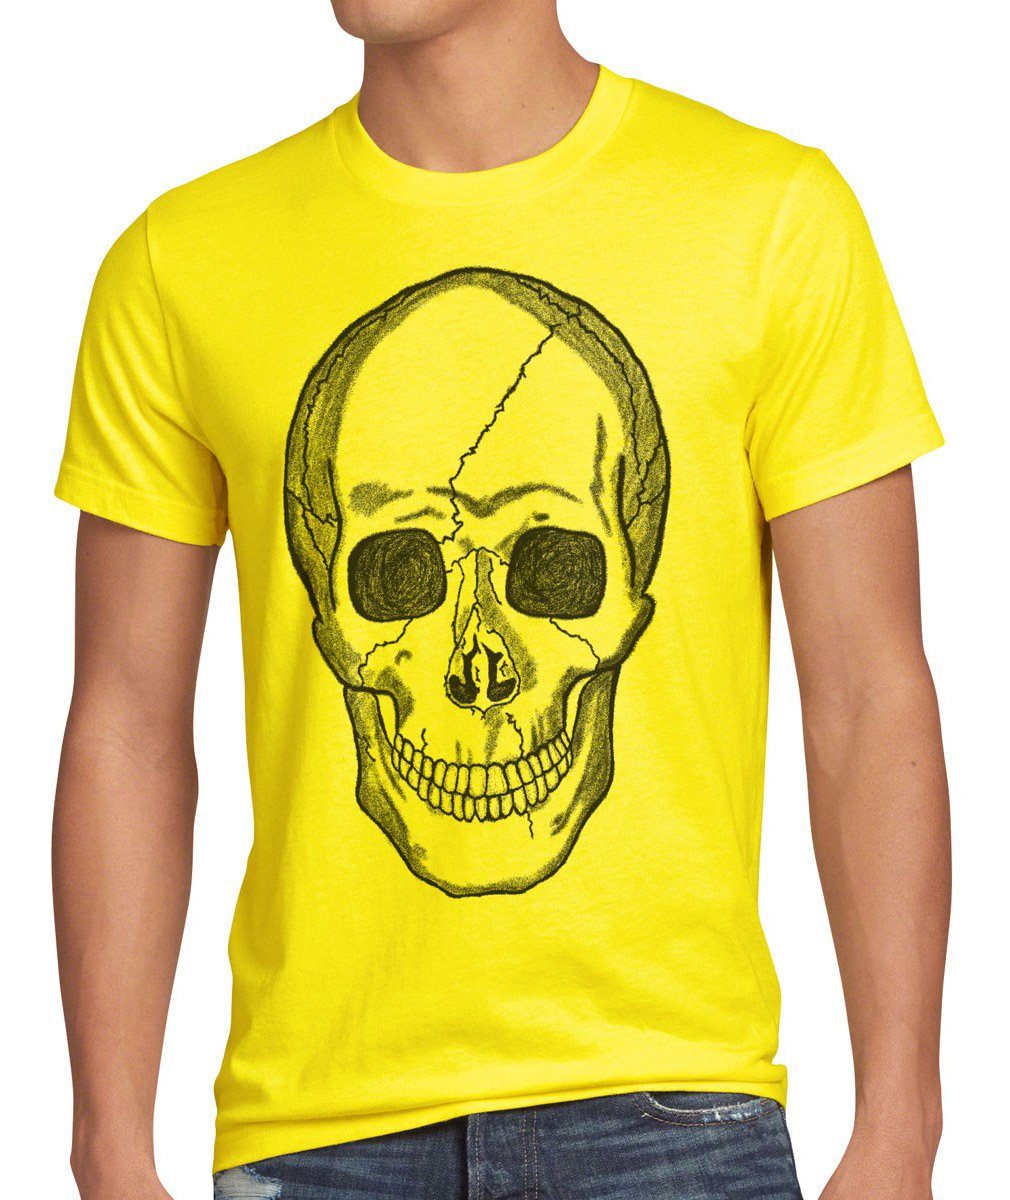 style3 us Harley gothic Print-Shirt Skull gelb Rocker biker knochen T-Shirt Totenkopf Herren Tattoo Punk